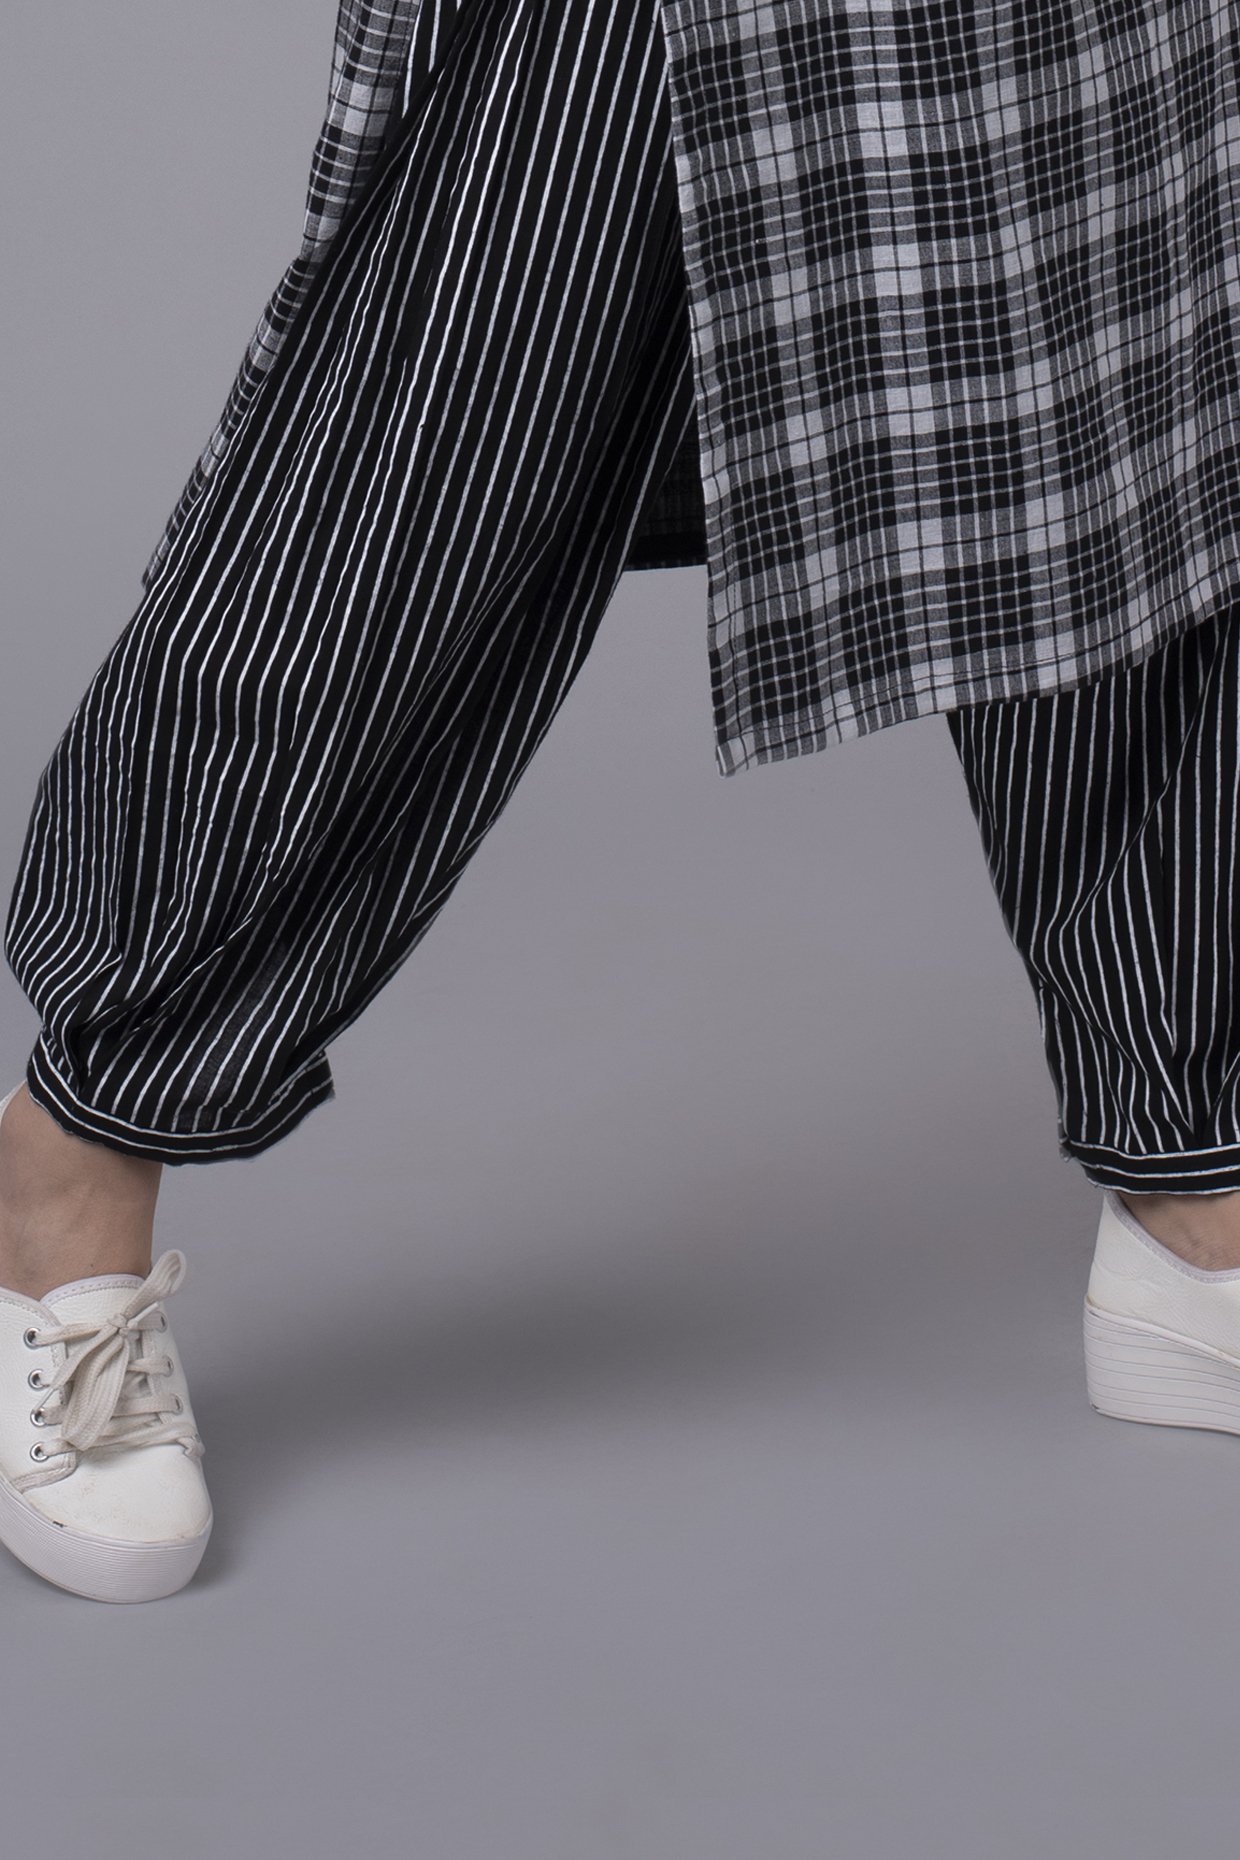 Buy Urban Scottish Women's Black Striped Lounge Pants/Pyjama Pants  (USWPJ522-M) at Amazon.in